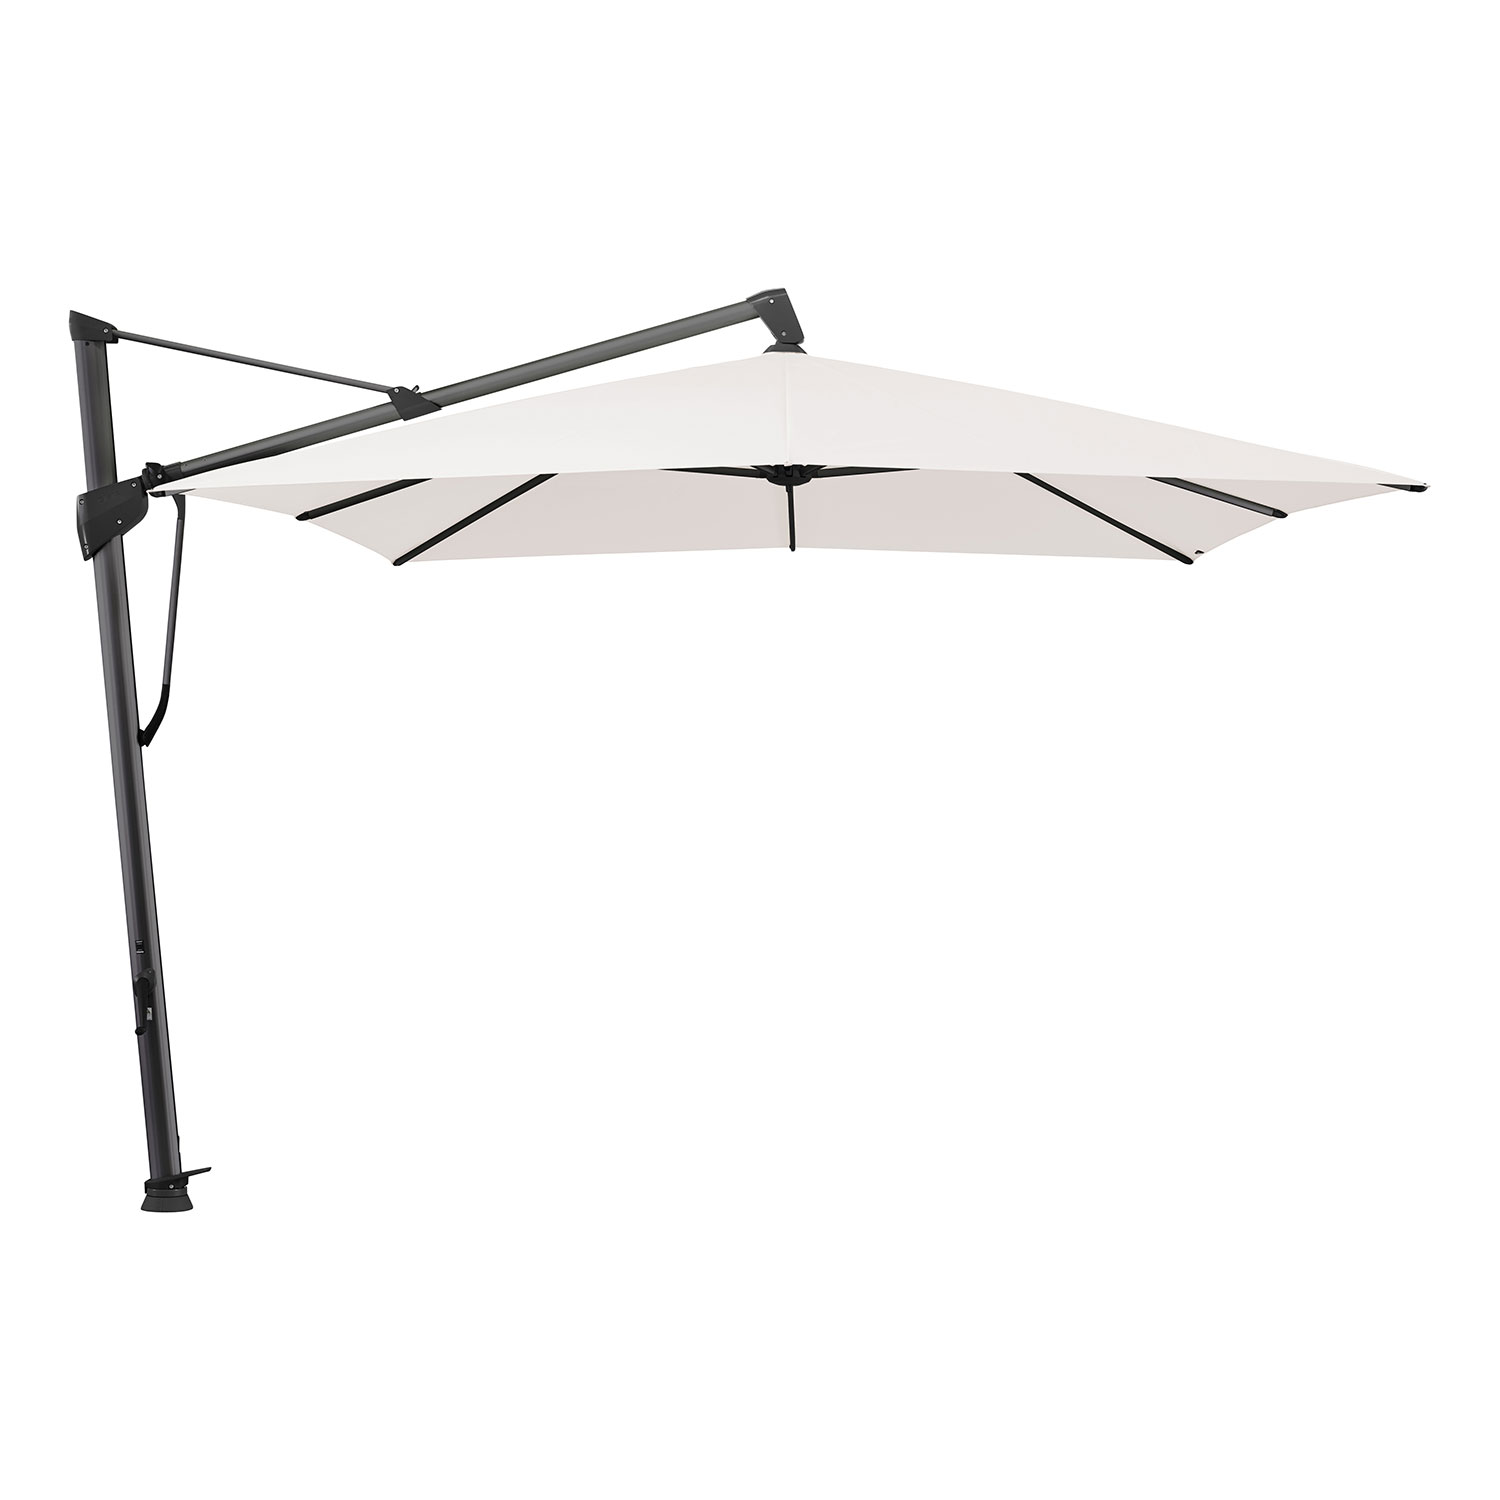 Sombrano S+ frihängande parasoll 400×300 cm kat.4 antracite alu / 404 white